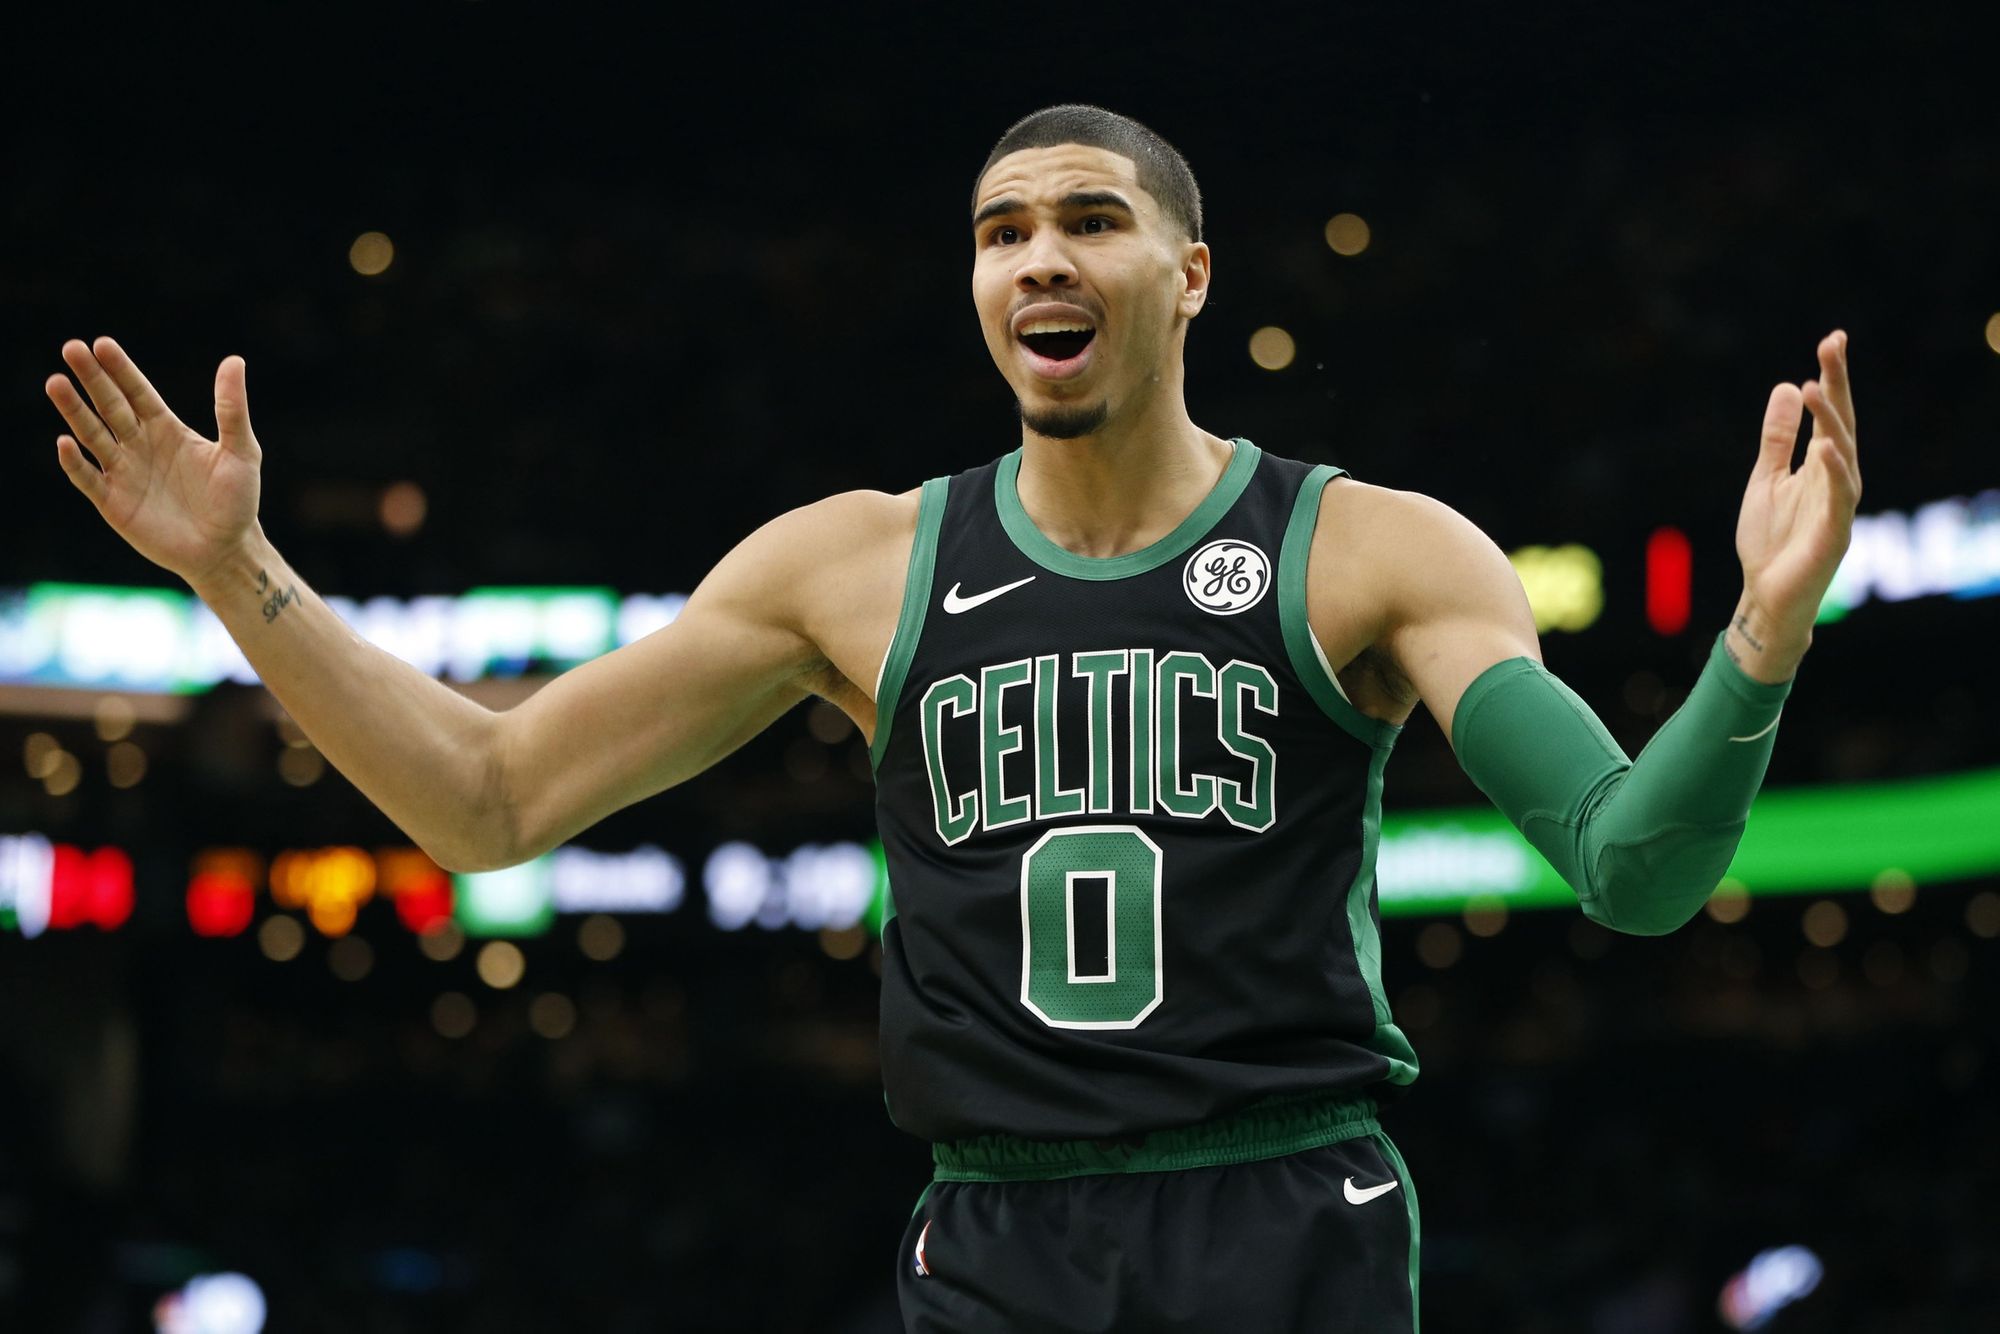 2019-20 NBA Break-out Stars: Can Celtics Small Forward Jayson Tatum Finally Break Out?